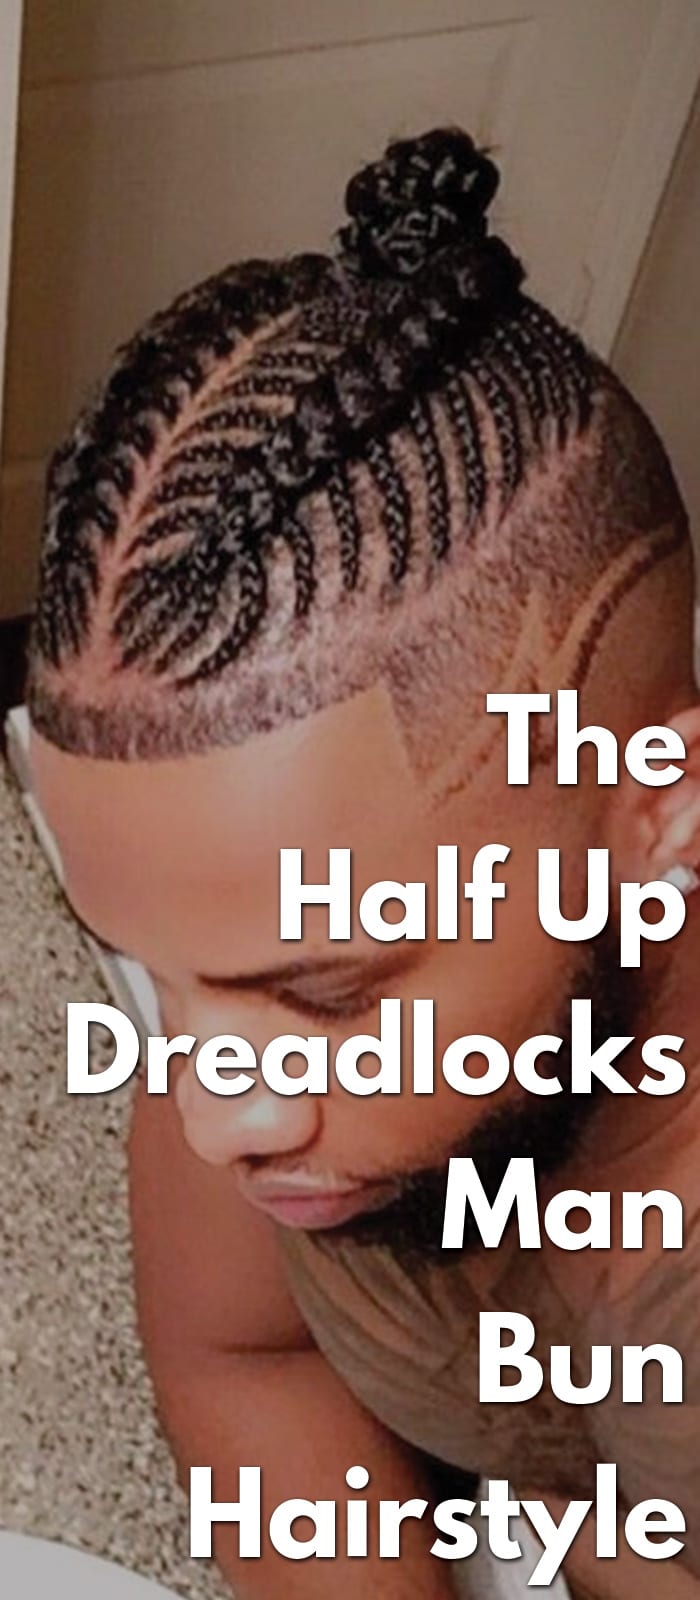 The Half Up Dreadlocks Man Bun Hairstyle